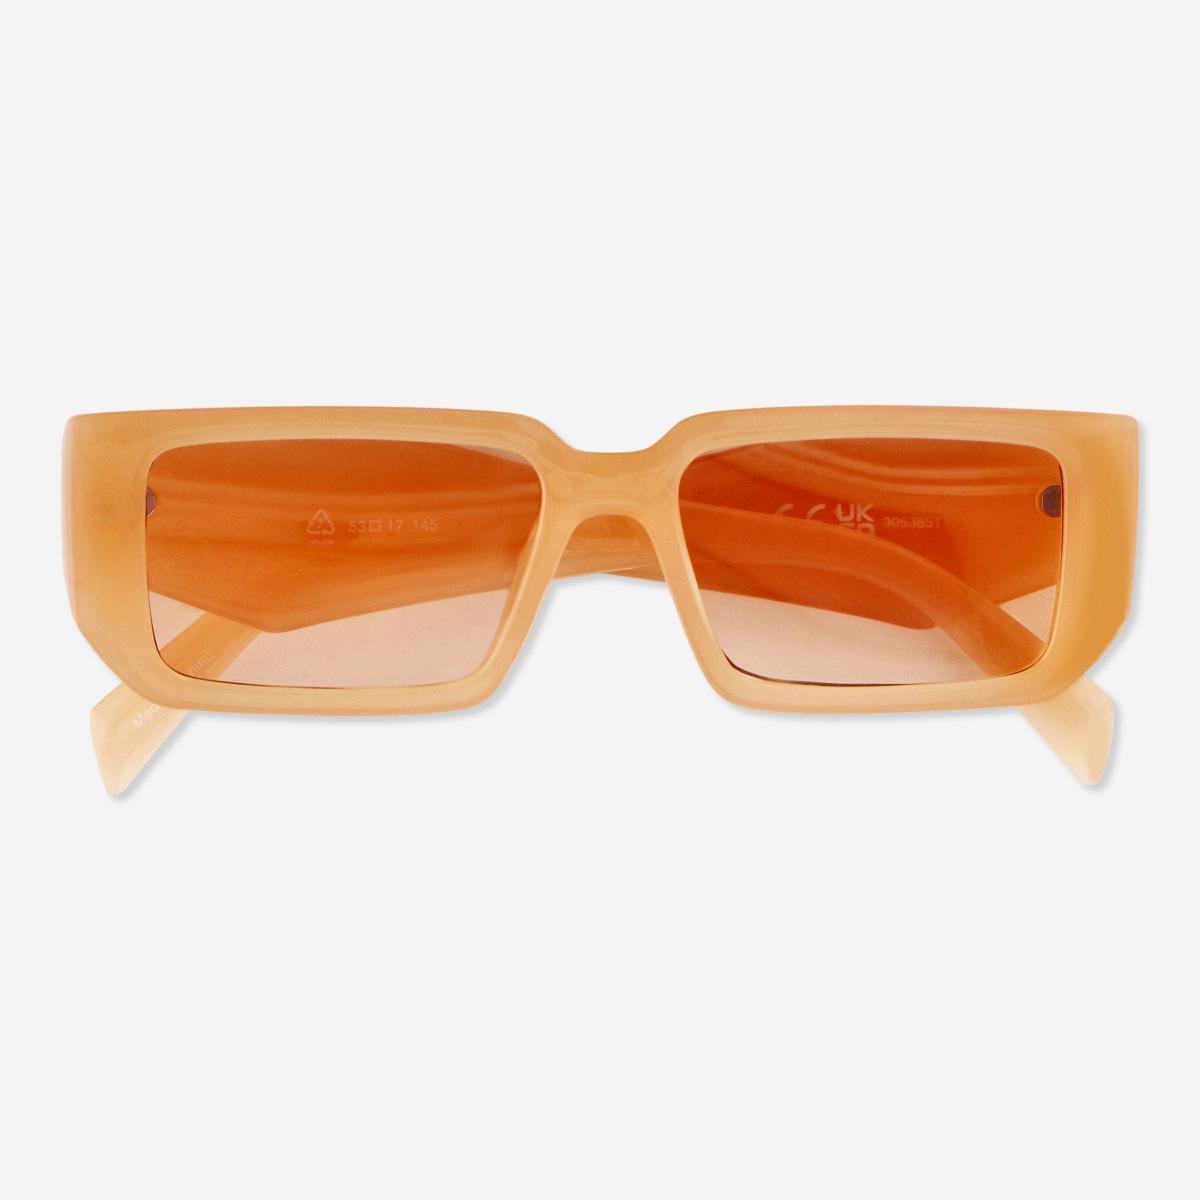 Orange sunglasses